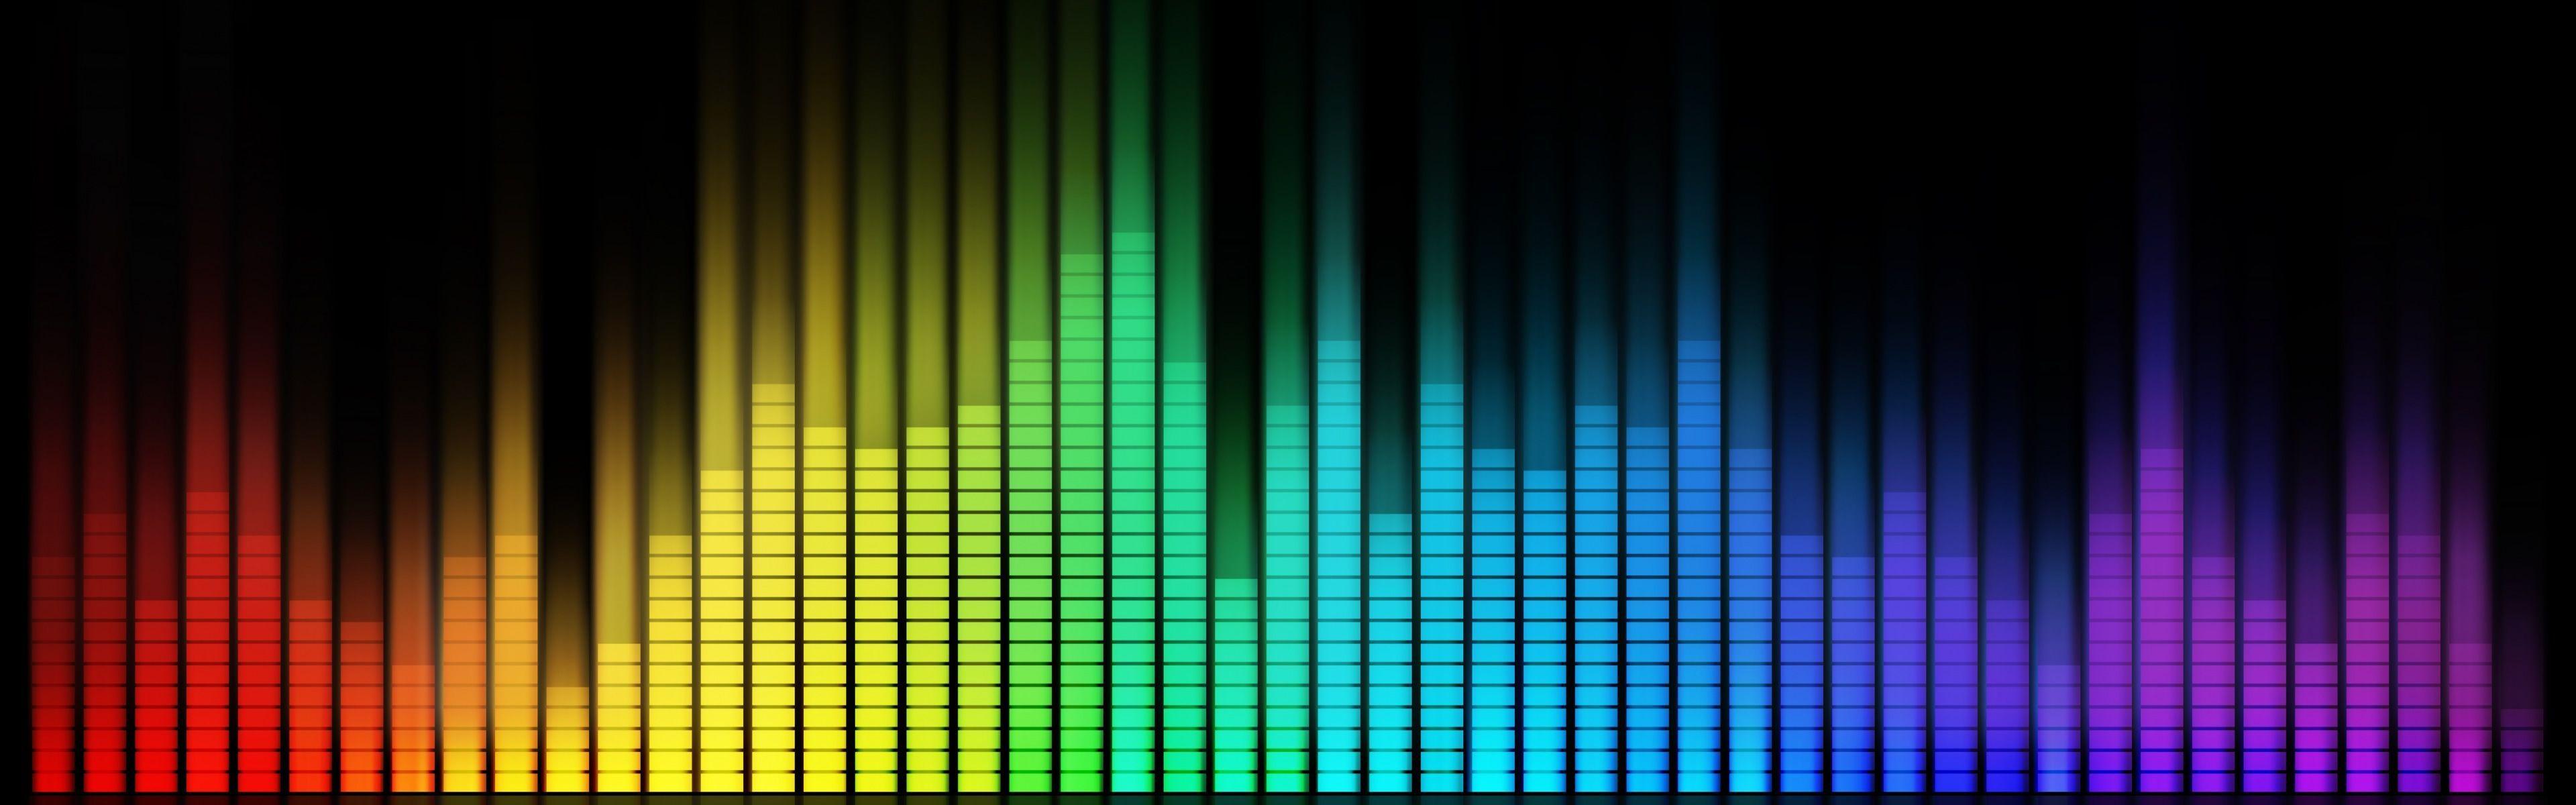 Music Equalizer iPhone Panoramic Wallpaper Download. iPad